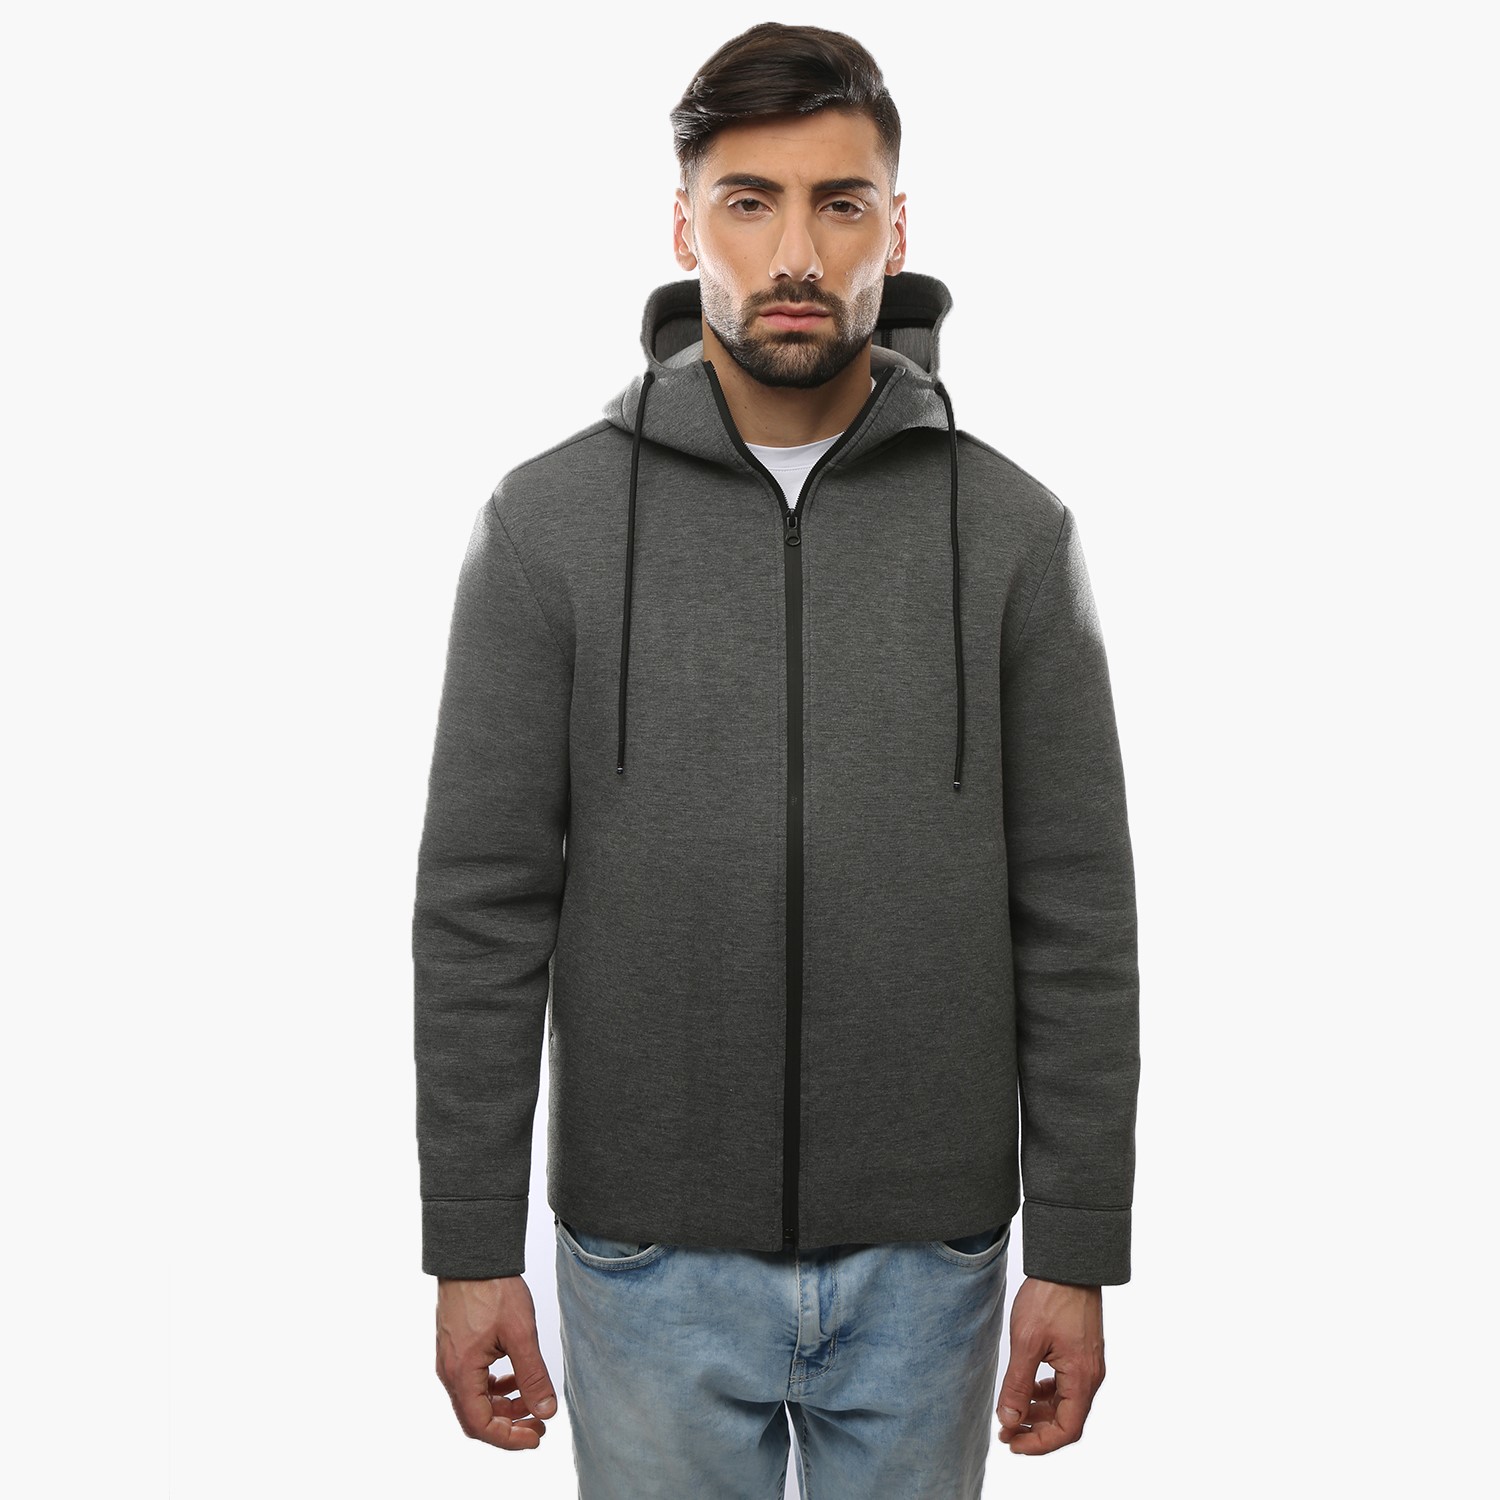 Scuba hoodie sweatshirt, Sweatshirts, Clothing Man